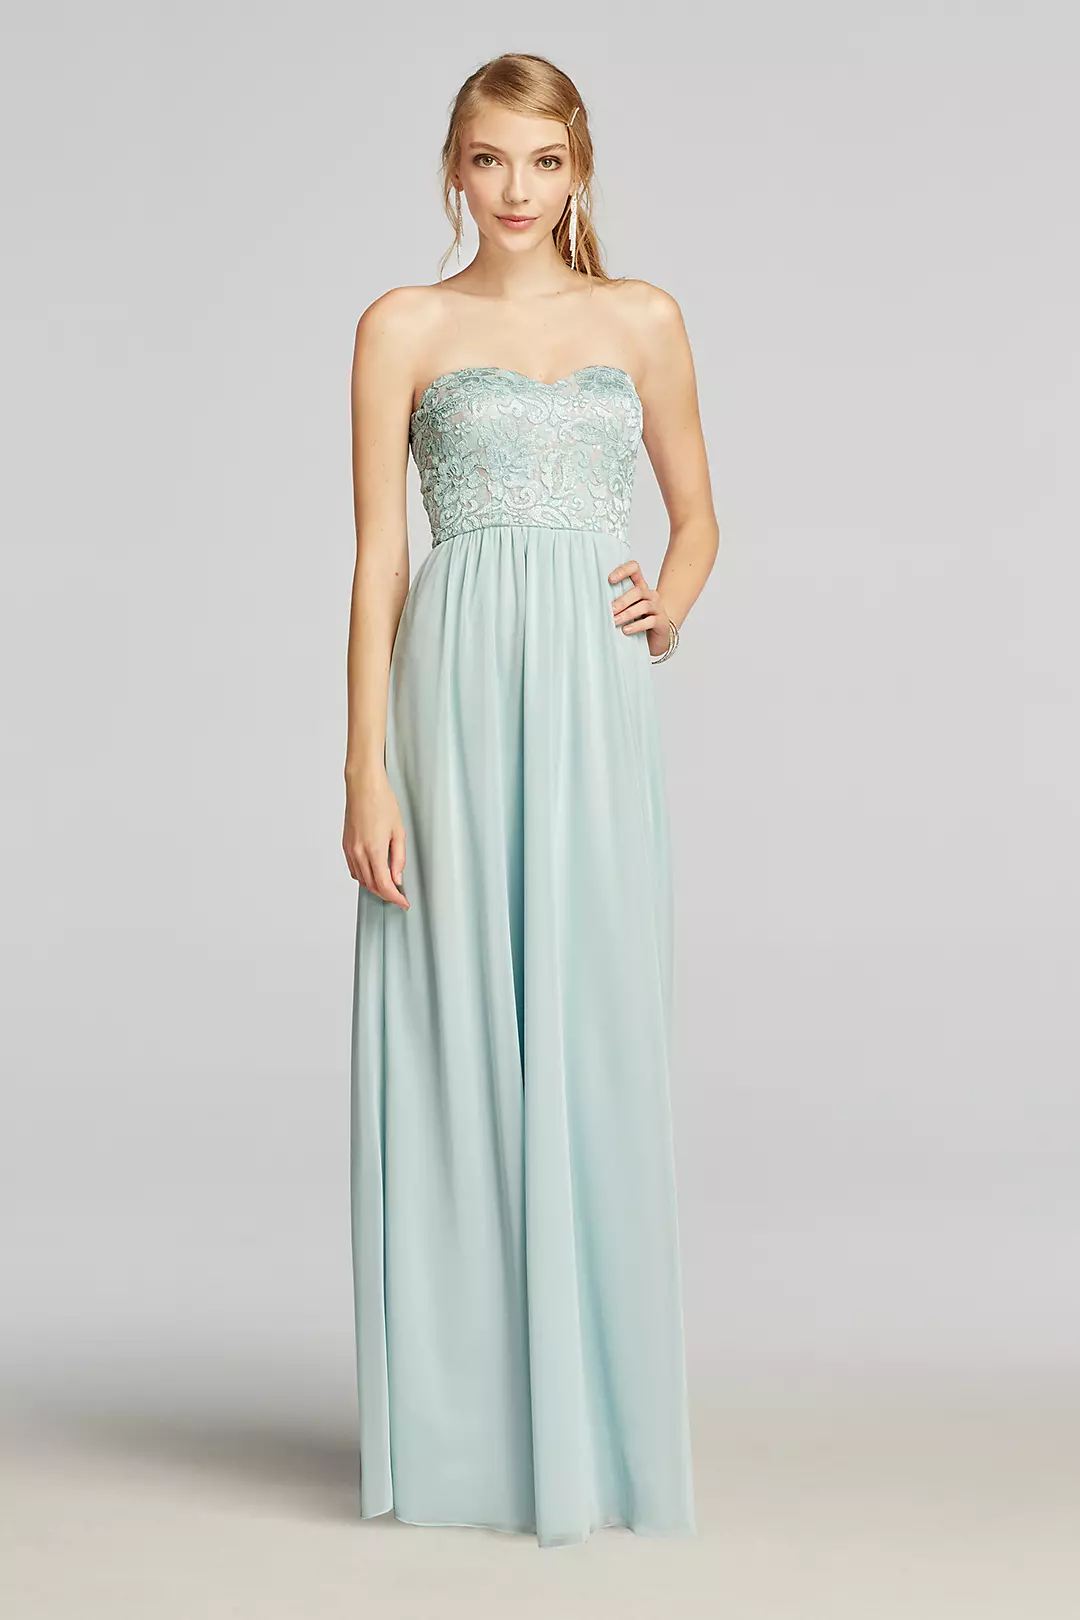 Strapless Chiffon Prom Dress with Lace Bodice Image